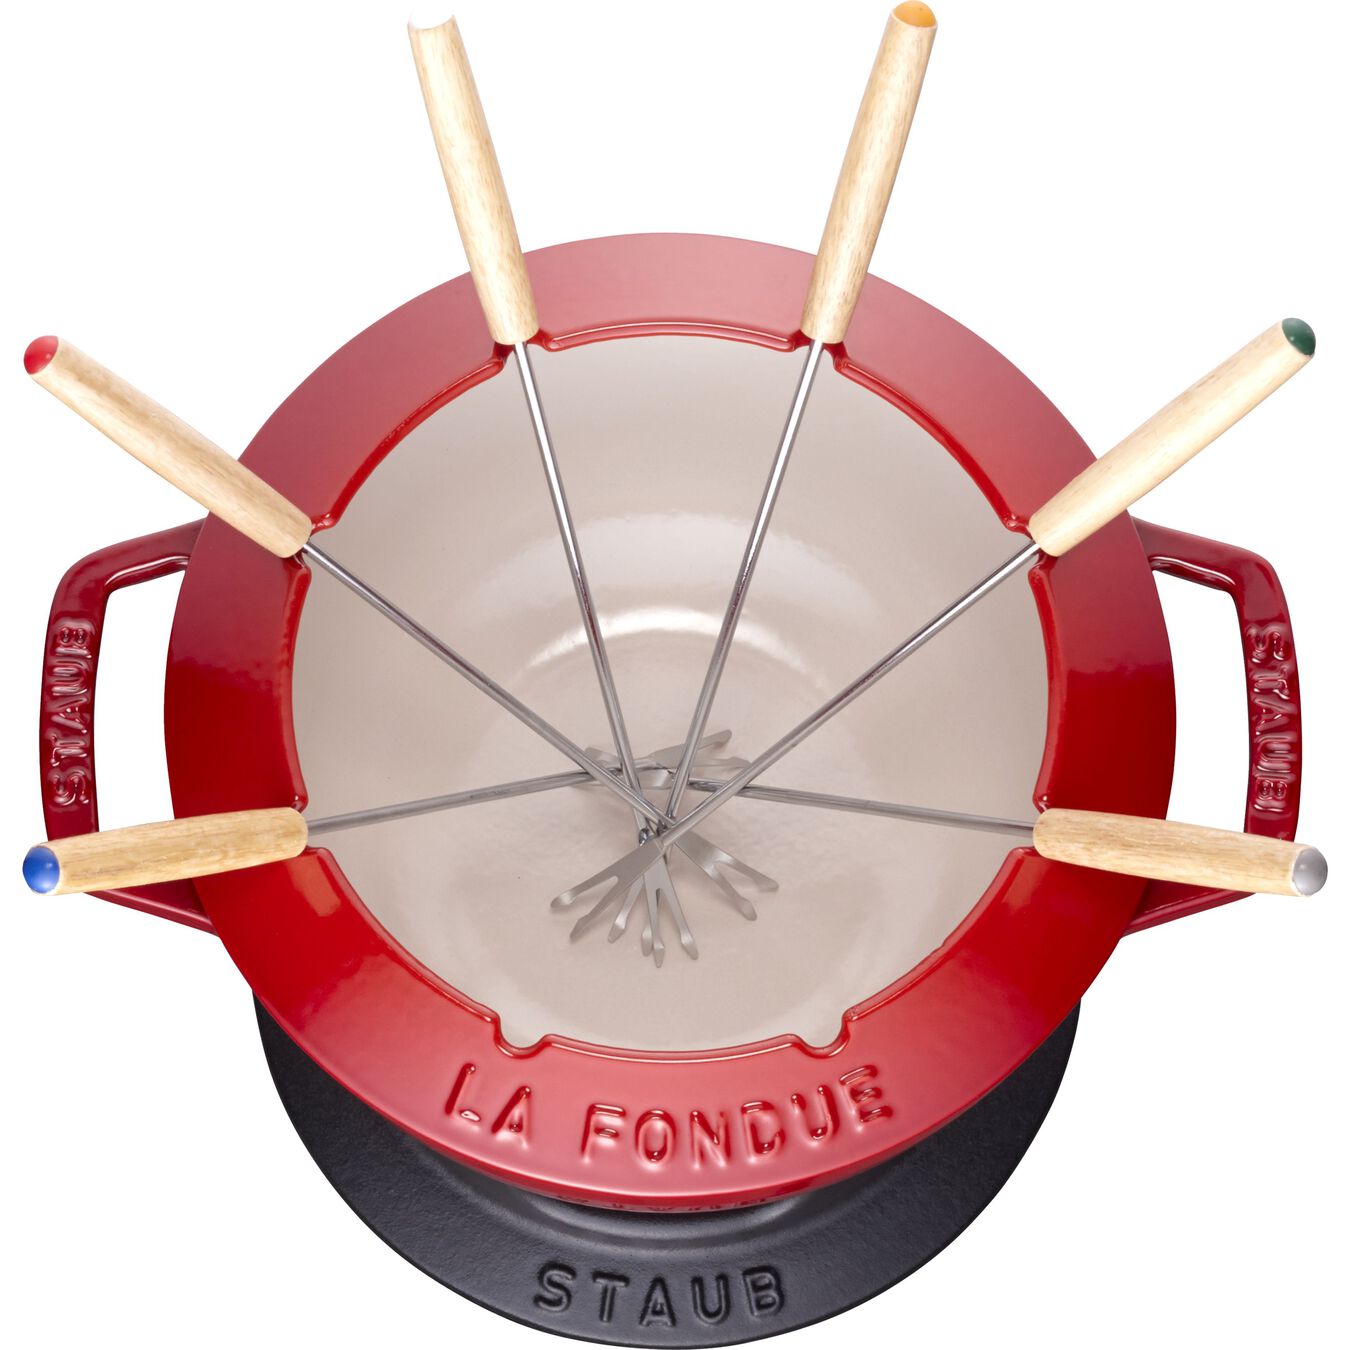 Juego de fondue 20 cm, Cereza,,large 4